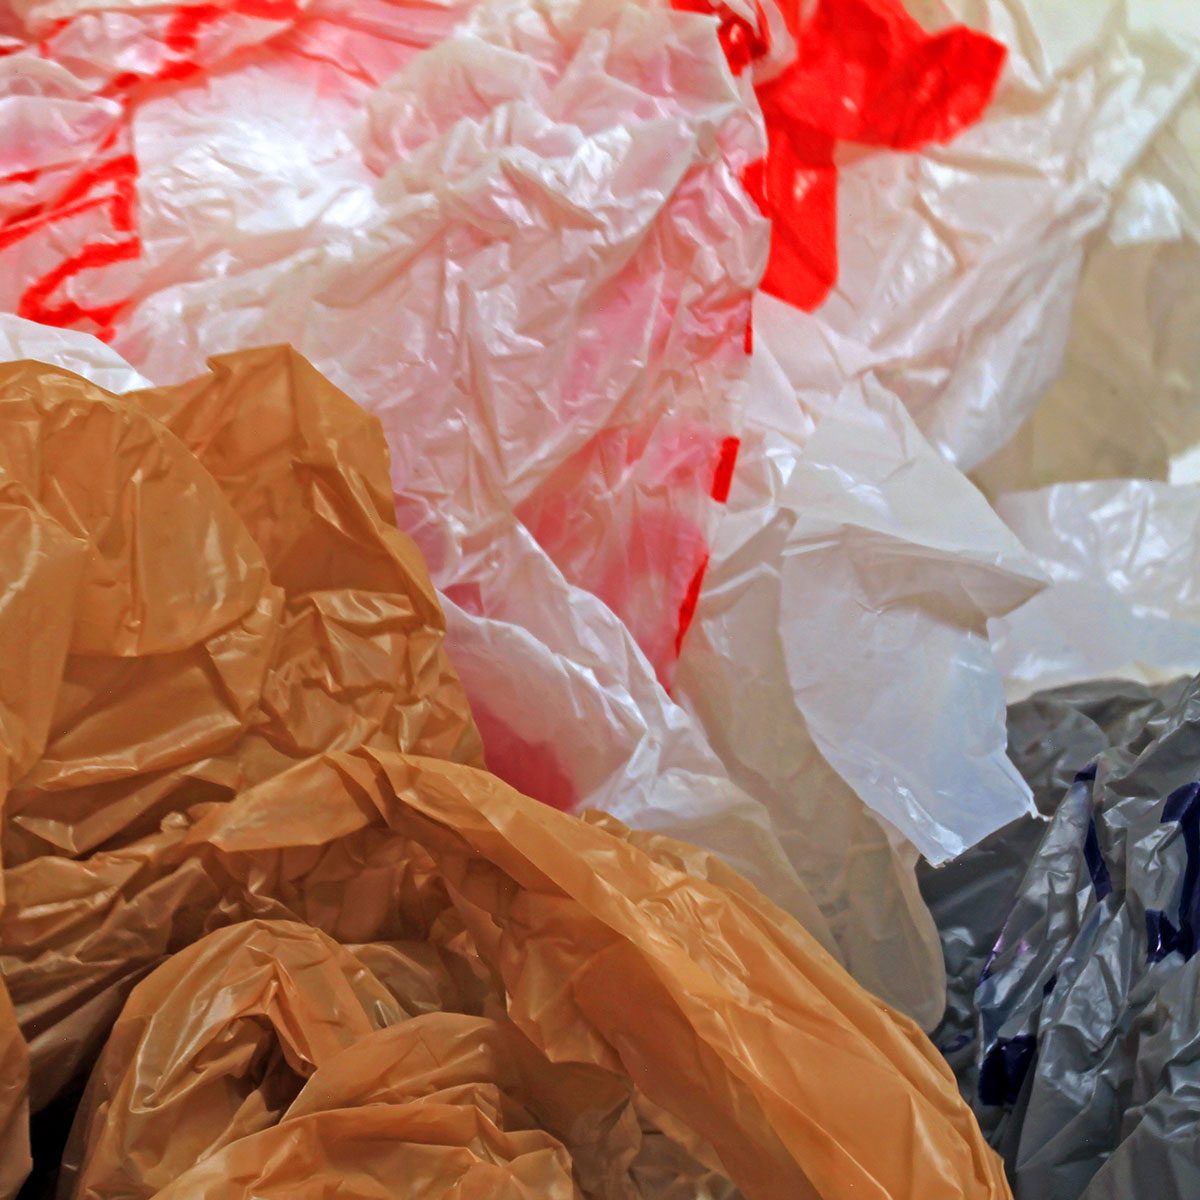 10 Free & Easy DIY Plastic Bag Storage Ideas